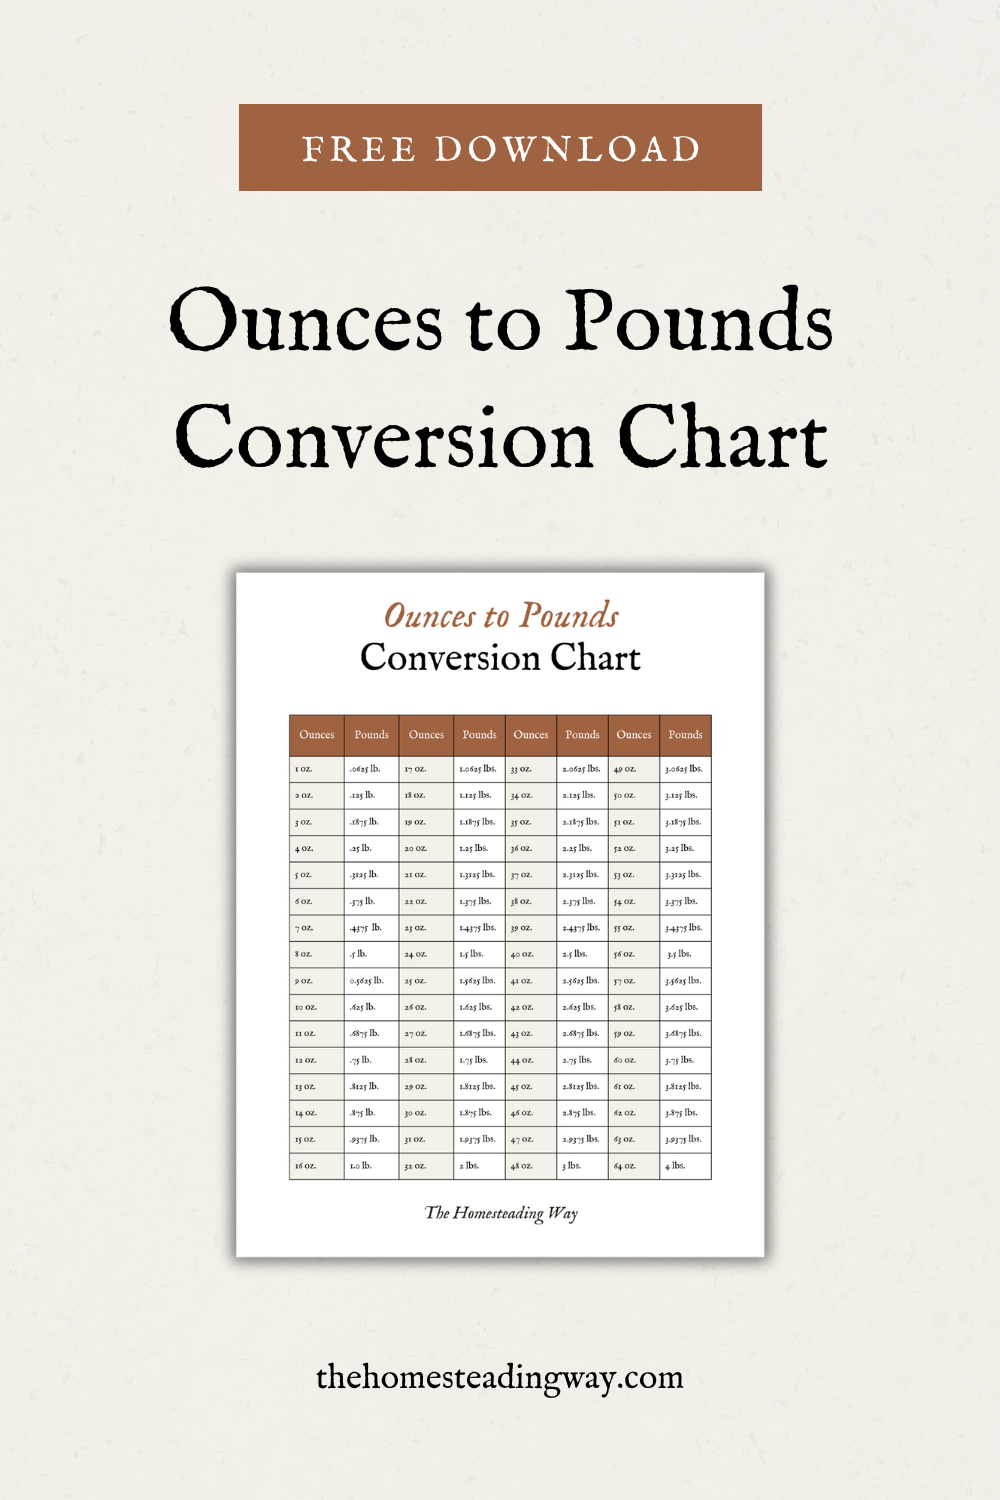 ounces to pounds conversion chart